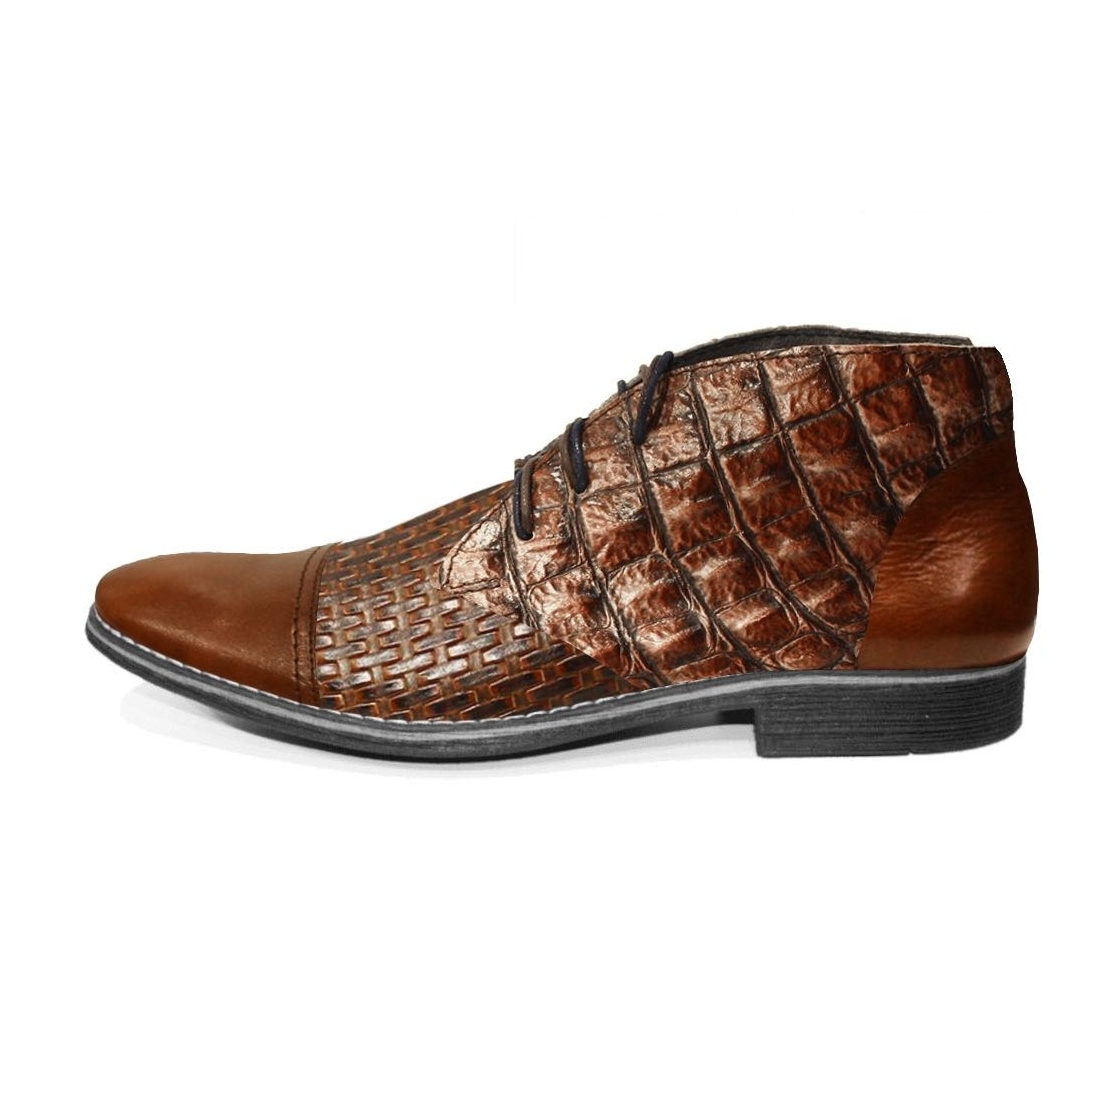 Modello Browerro - Desert Boots - Handmade Colorful Italian Leather Shoes